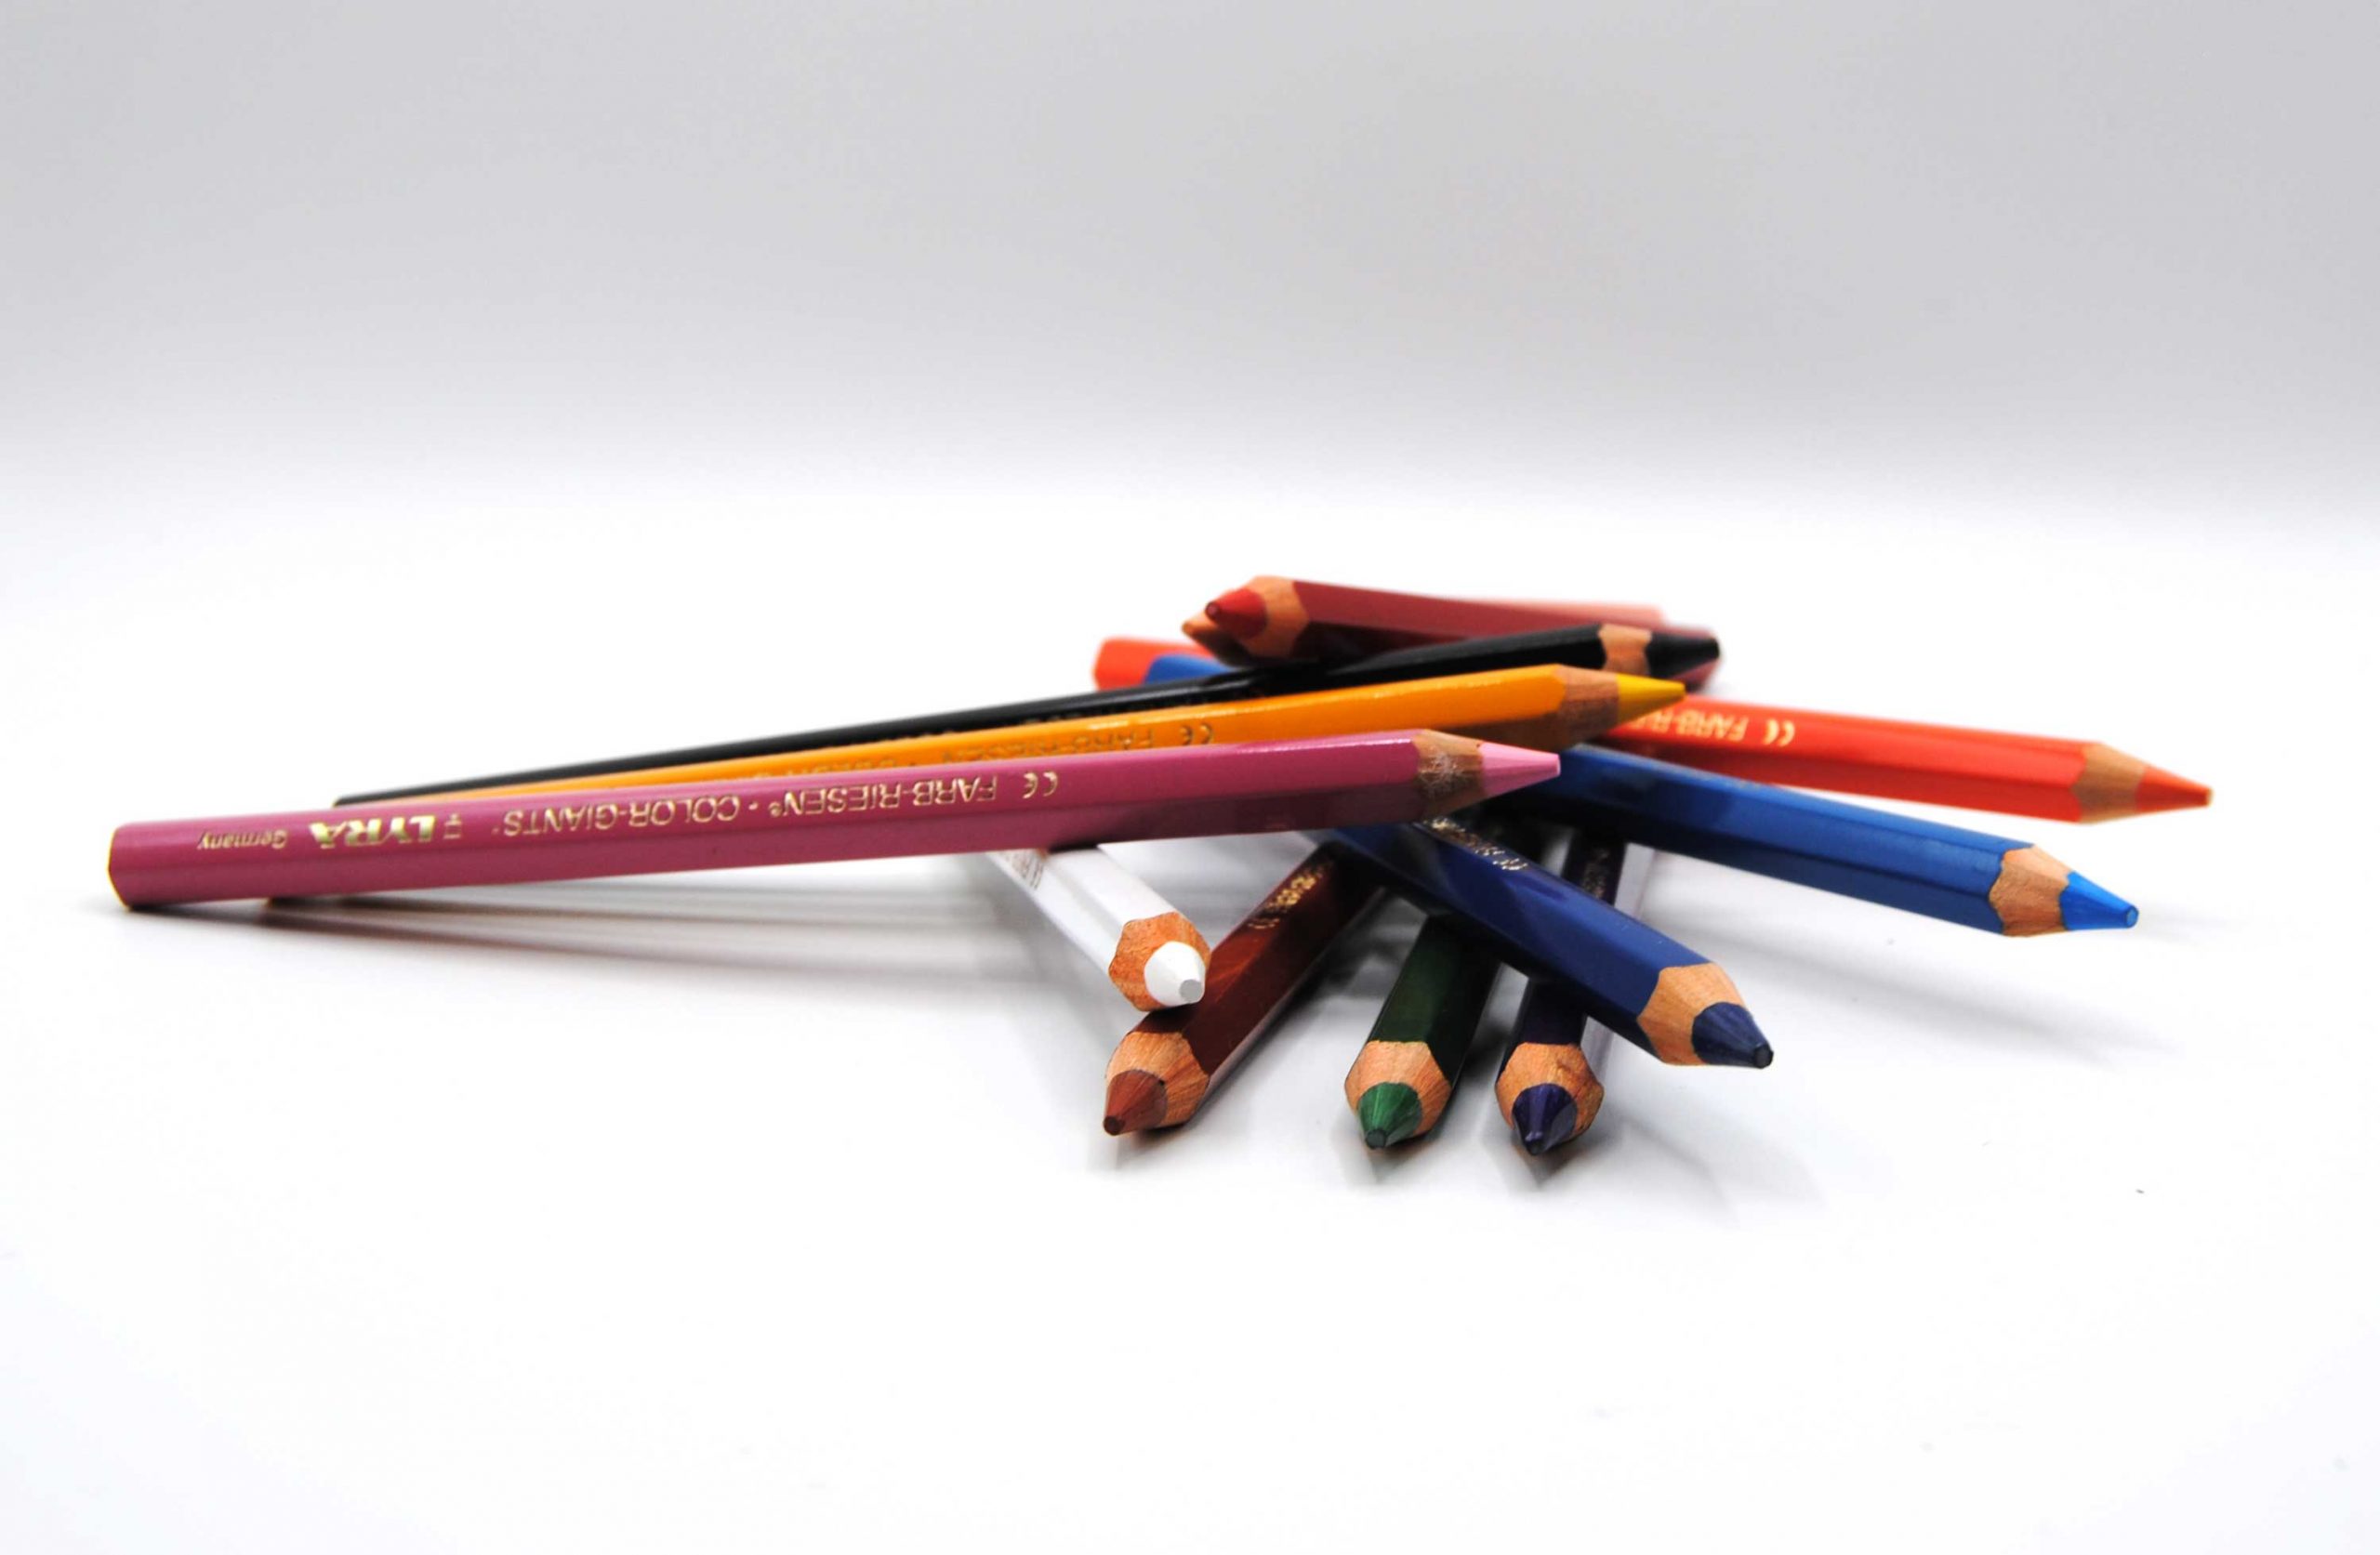 Lyra Color Giant Pencils - Metallic Bright Skin Tones Choose Your Color